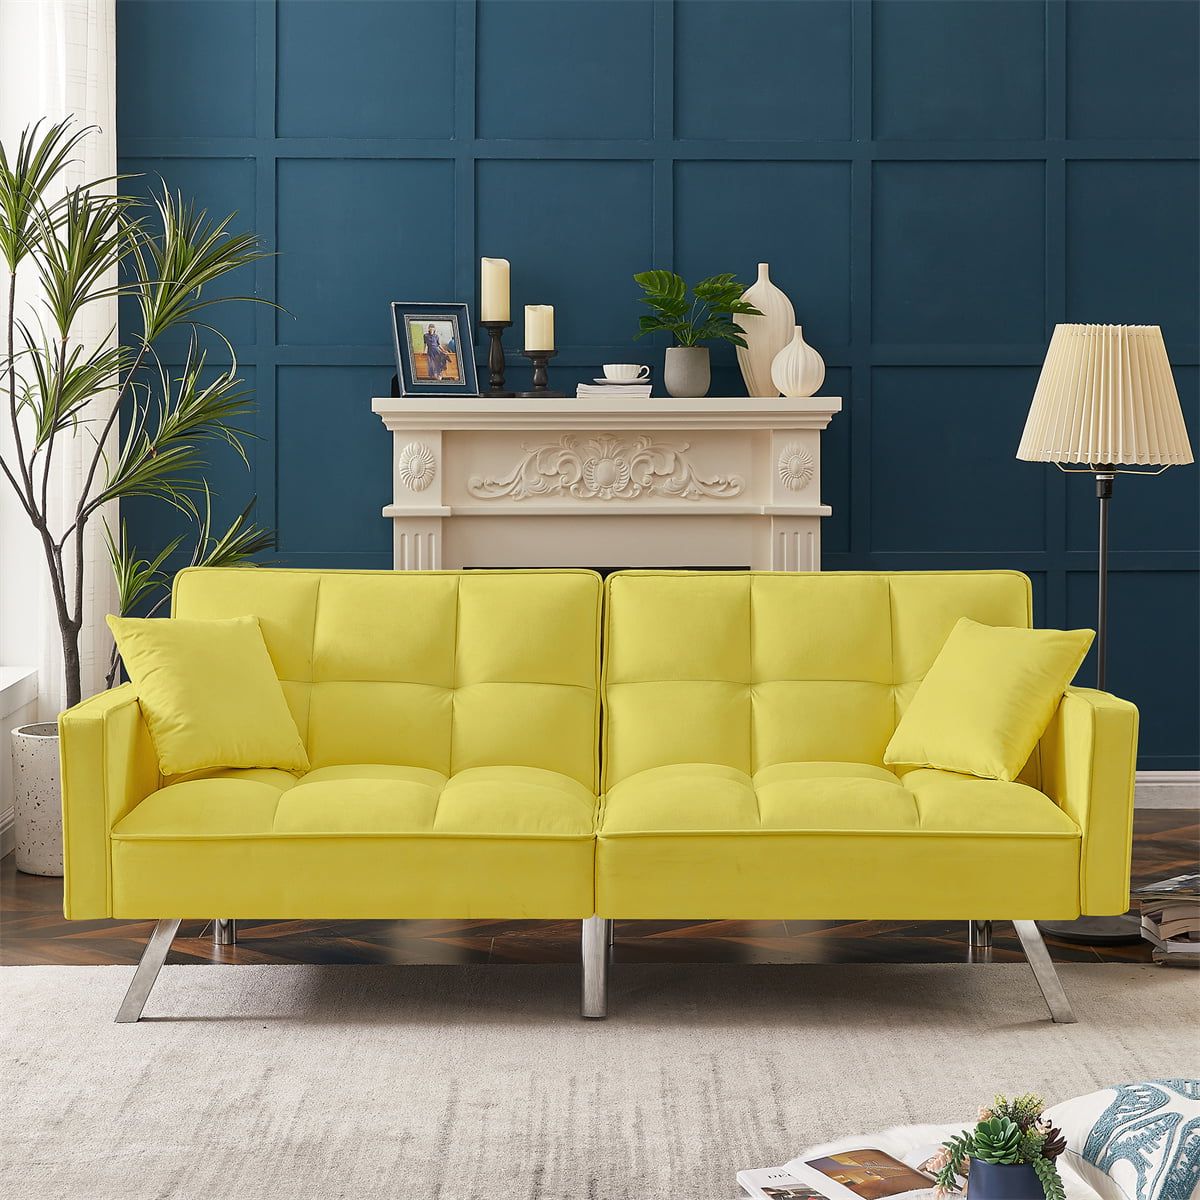 Velvet Sofa Bed, Modern Velvet Sofa Couch Bed With Armrests & 2 Pillows Intended For Modern Velvet Sofa Recliners With Storage (Gallery 18 of 20)